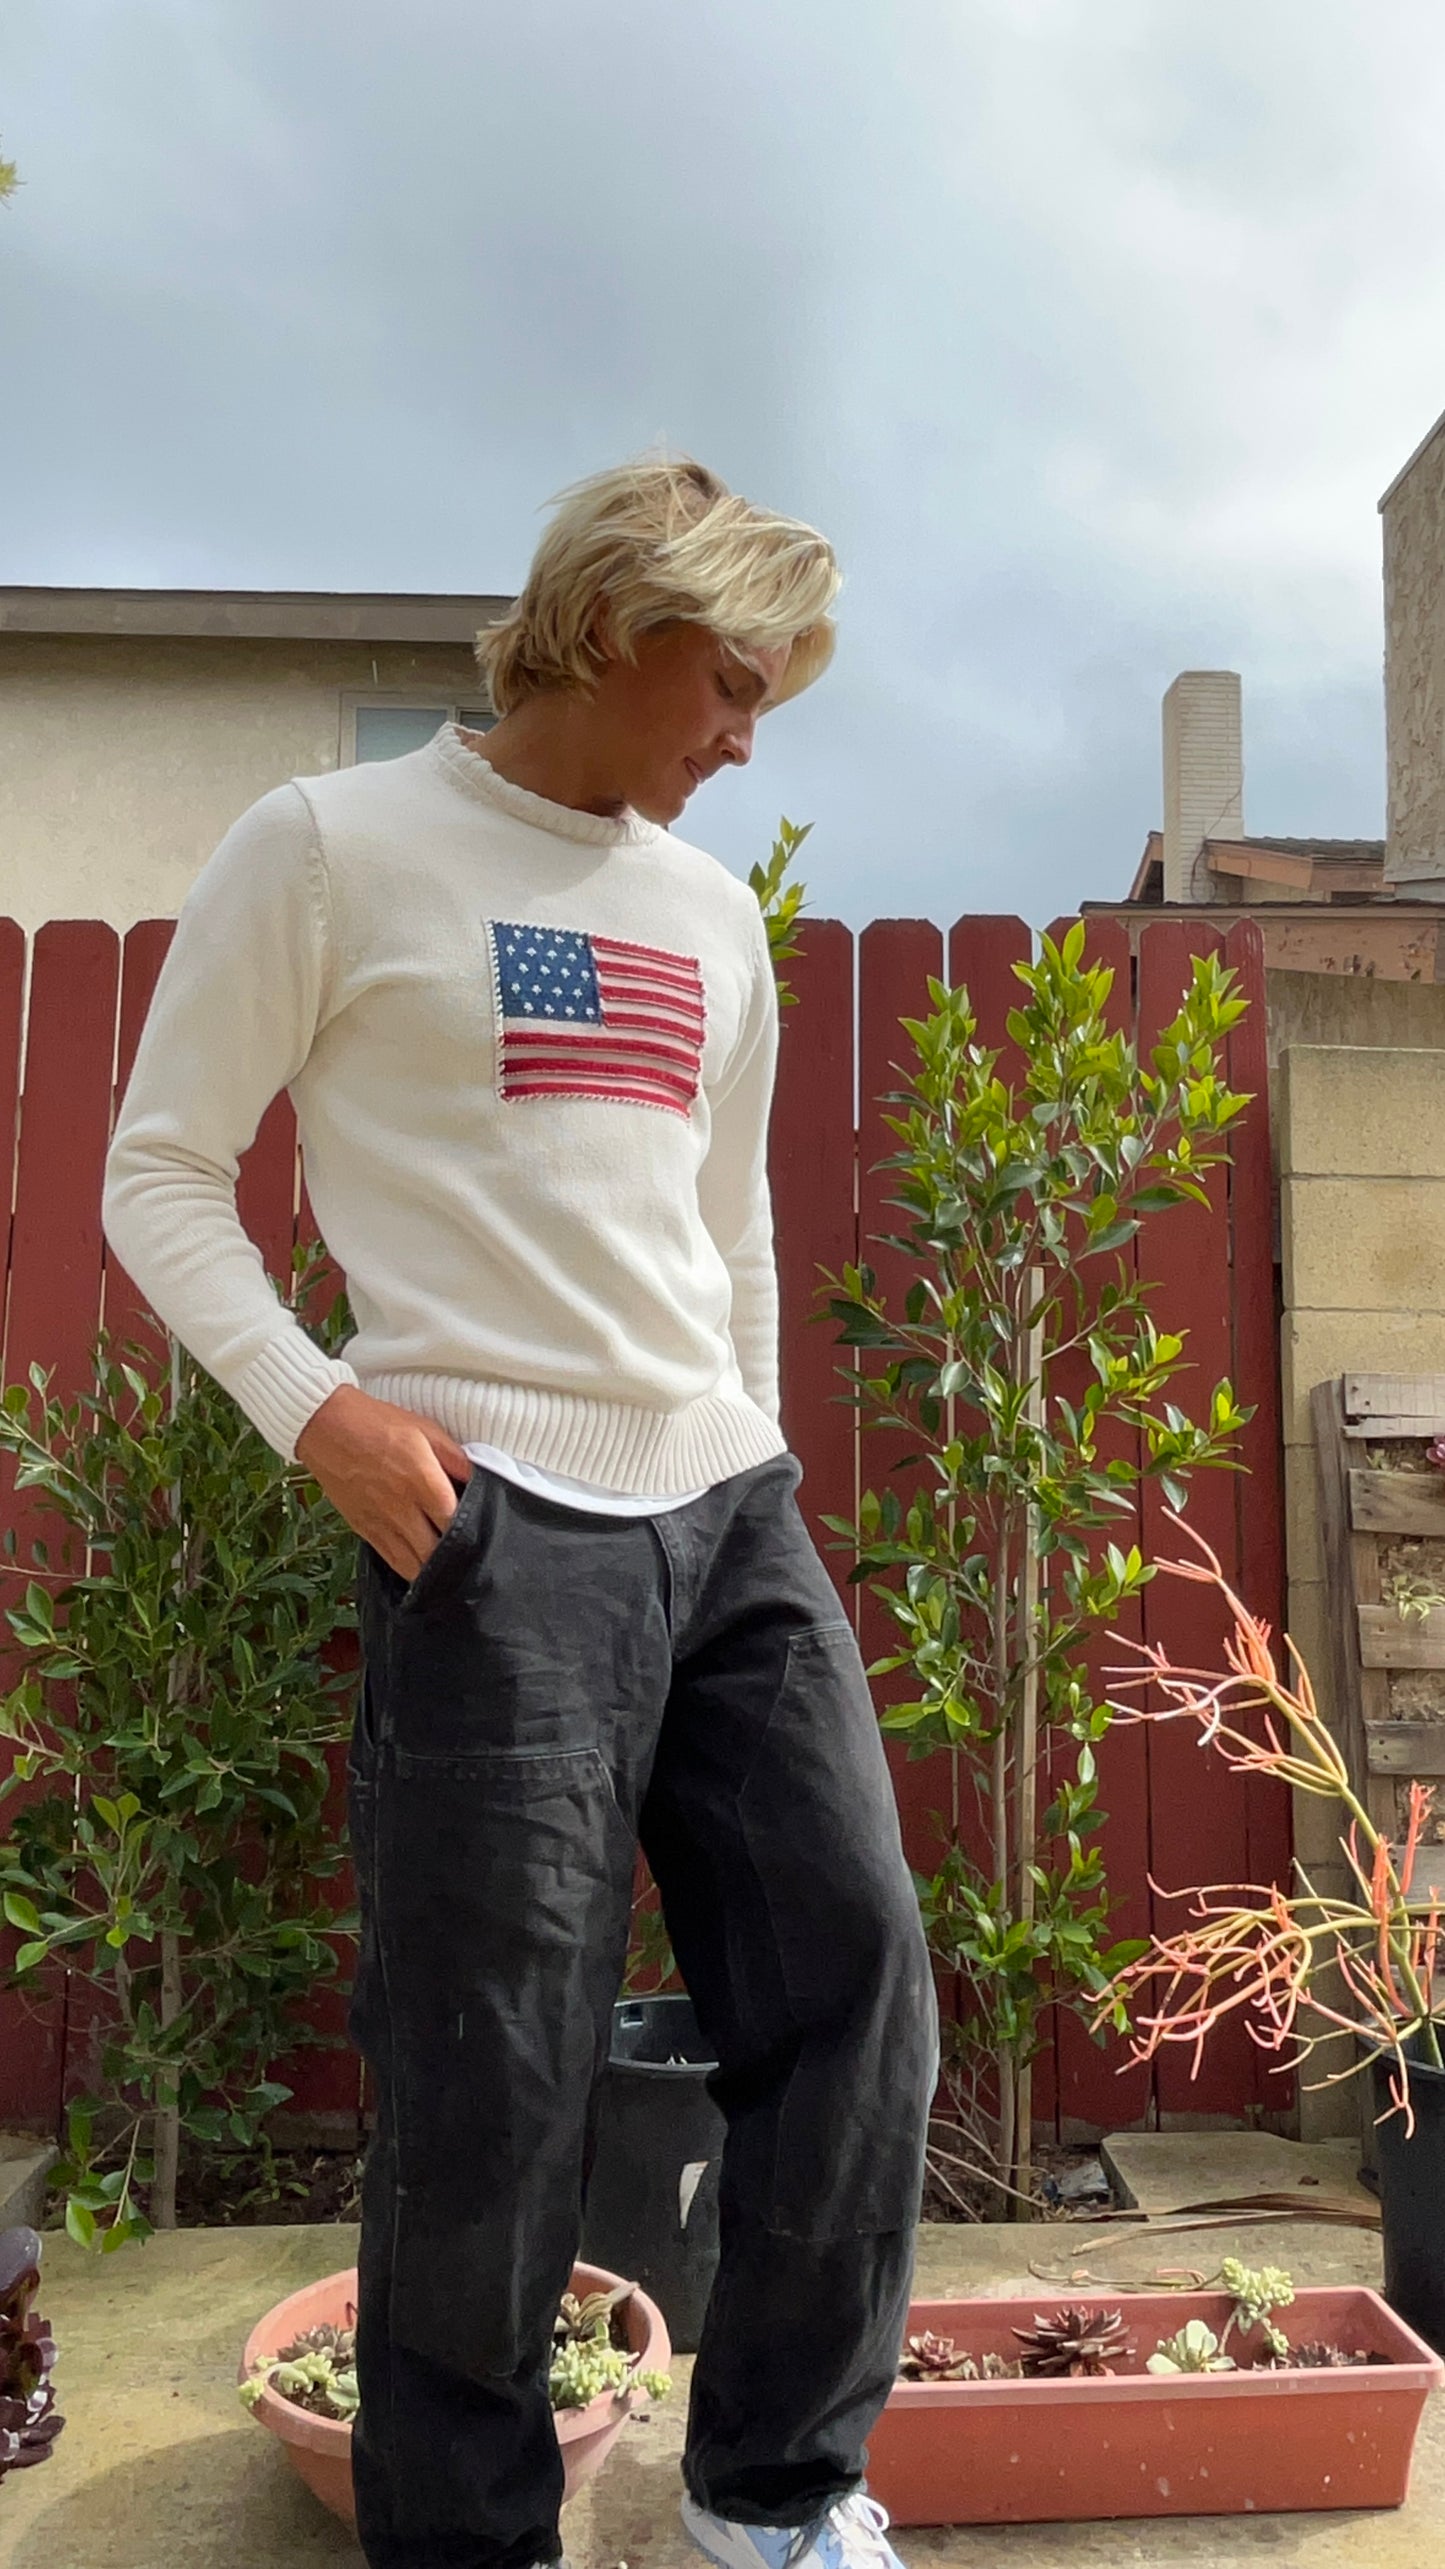 Vintage Gant American Flag sweater